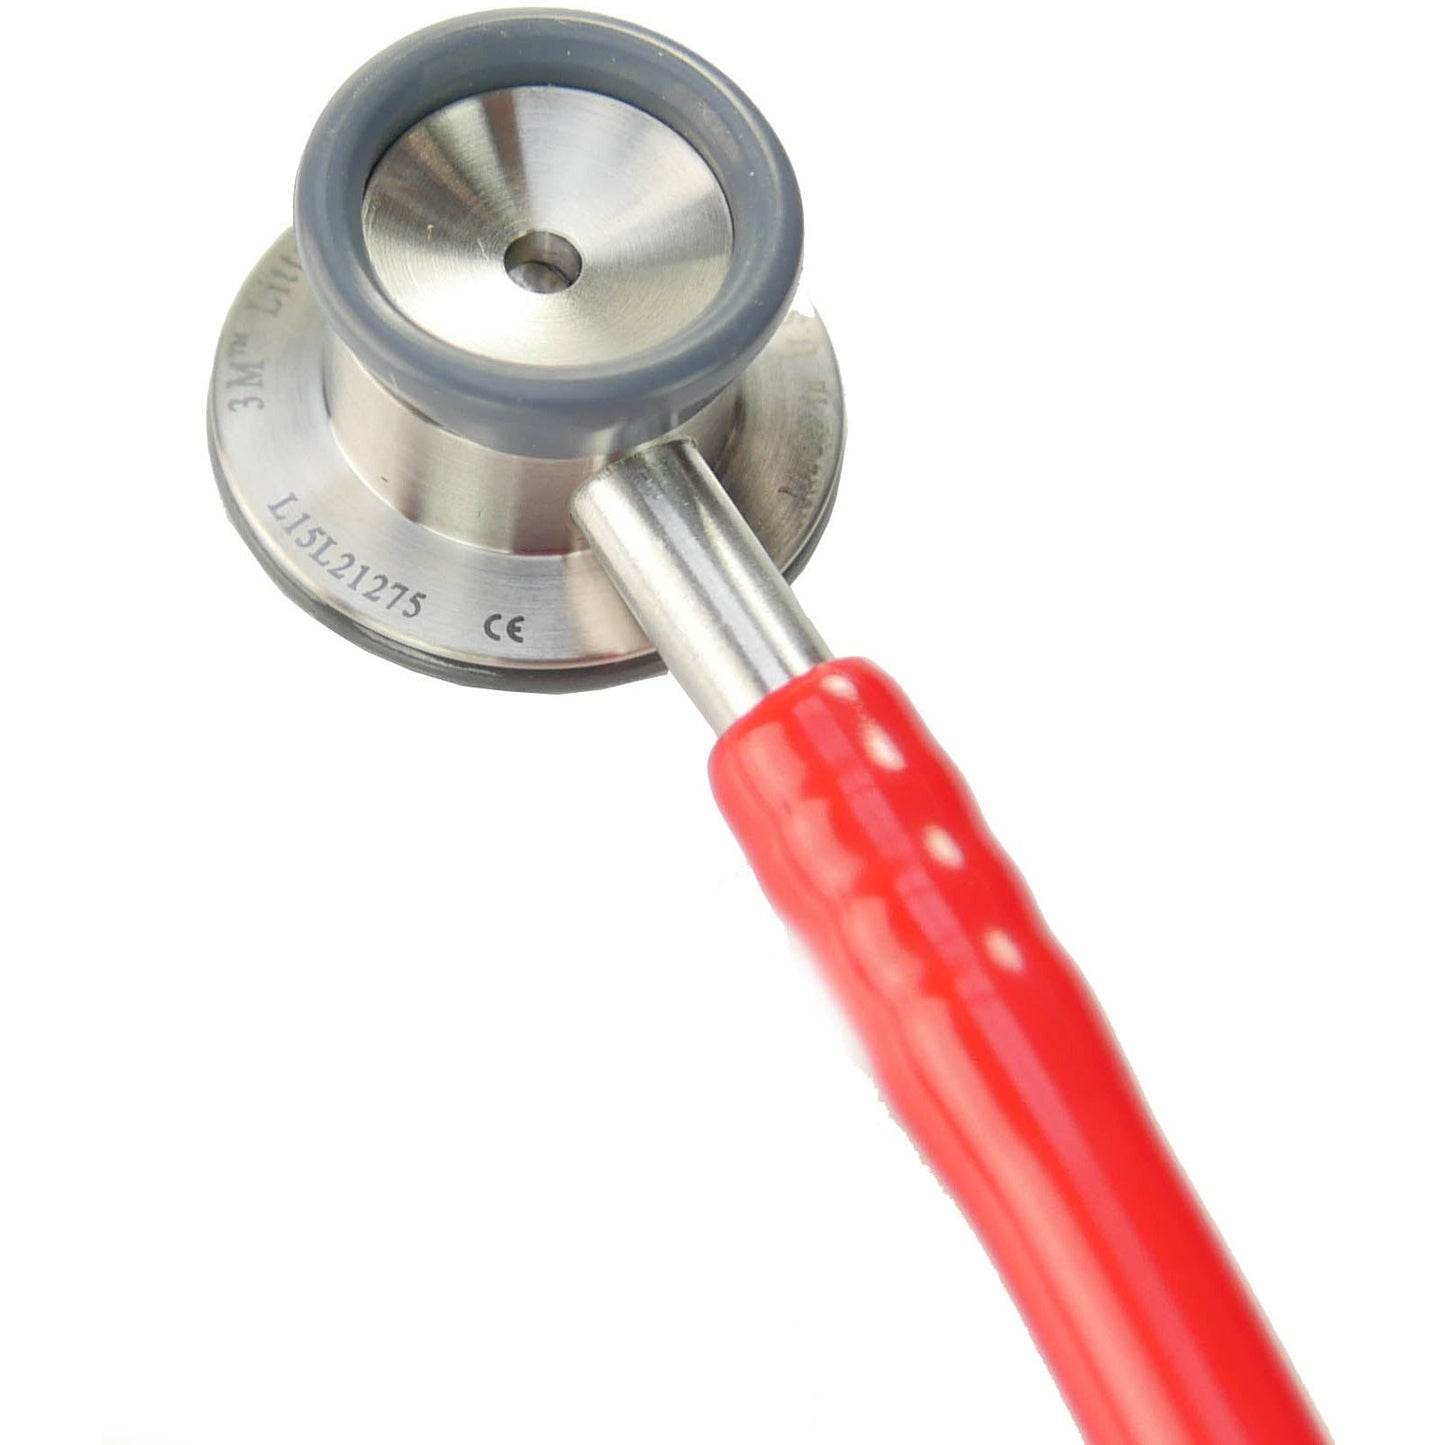 Littmann Classic II Infant Stethoscope: Red 2114R